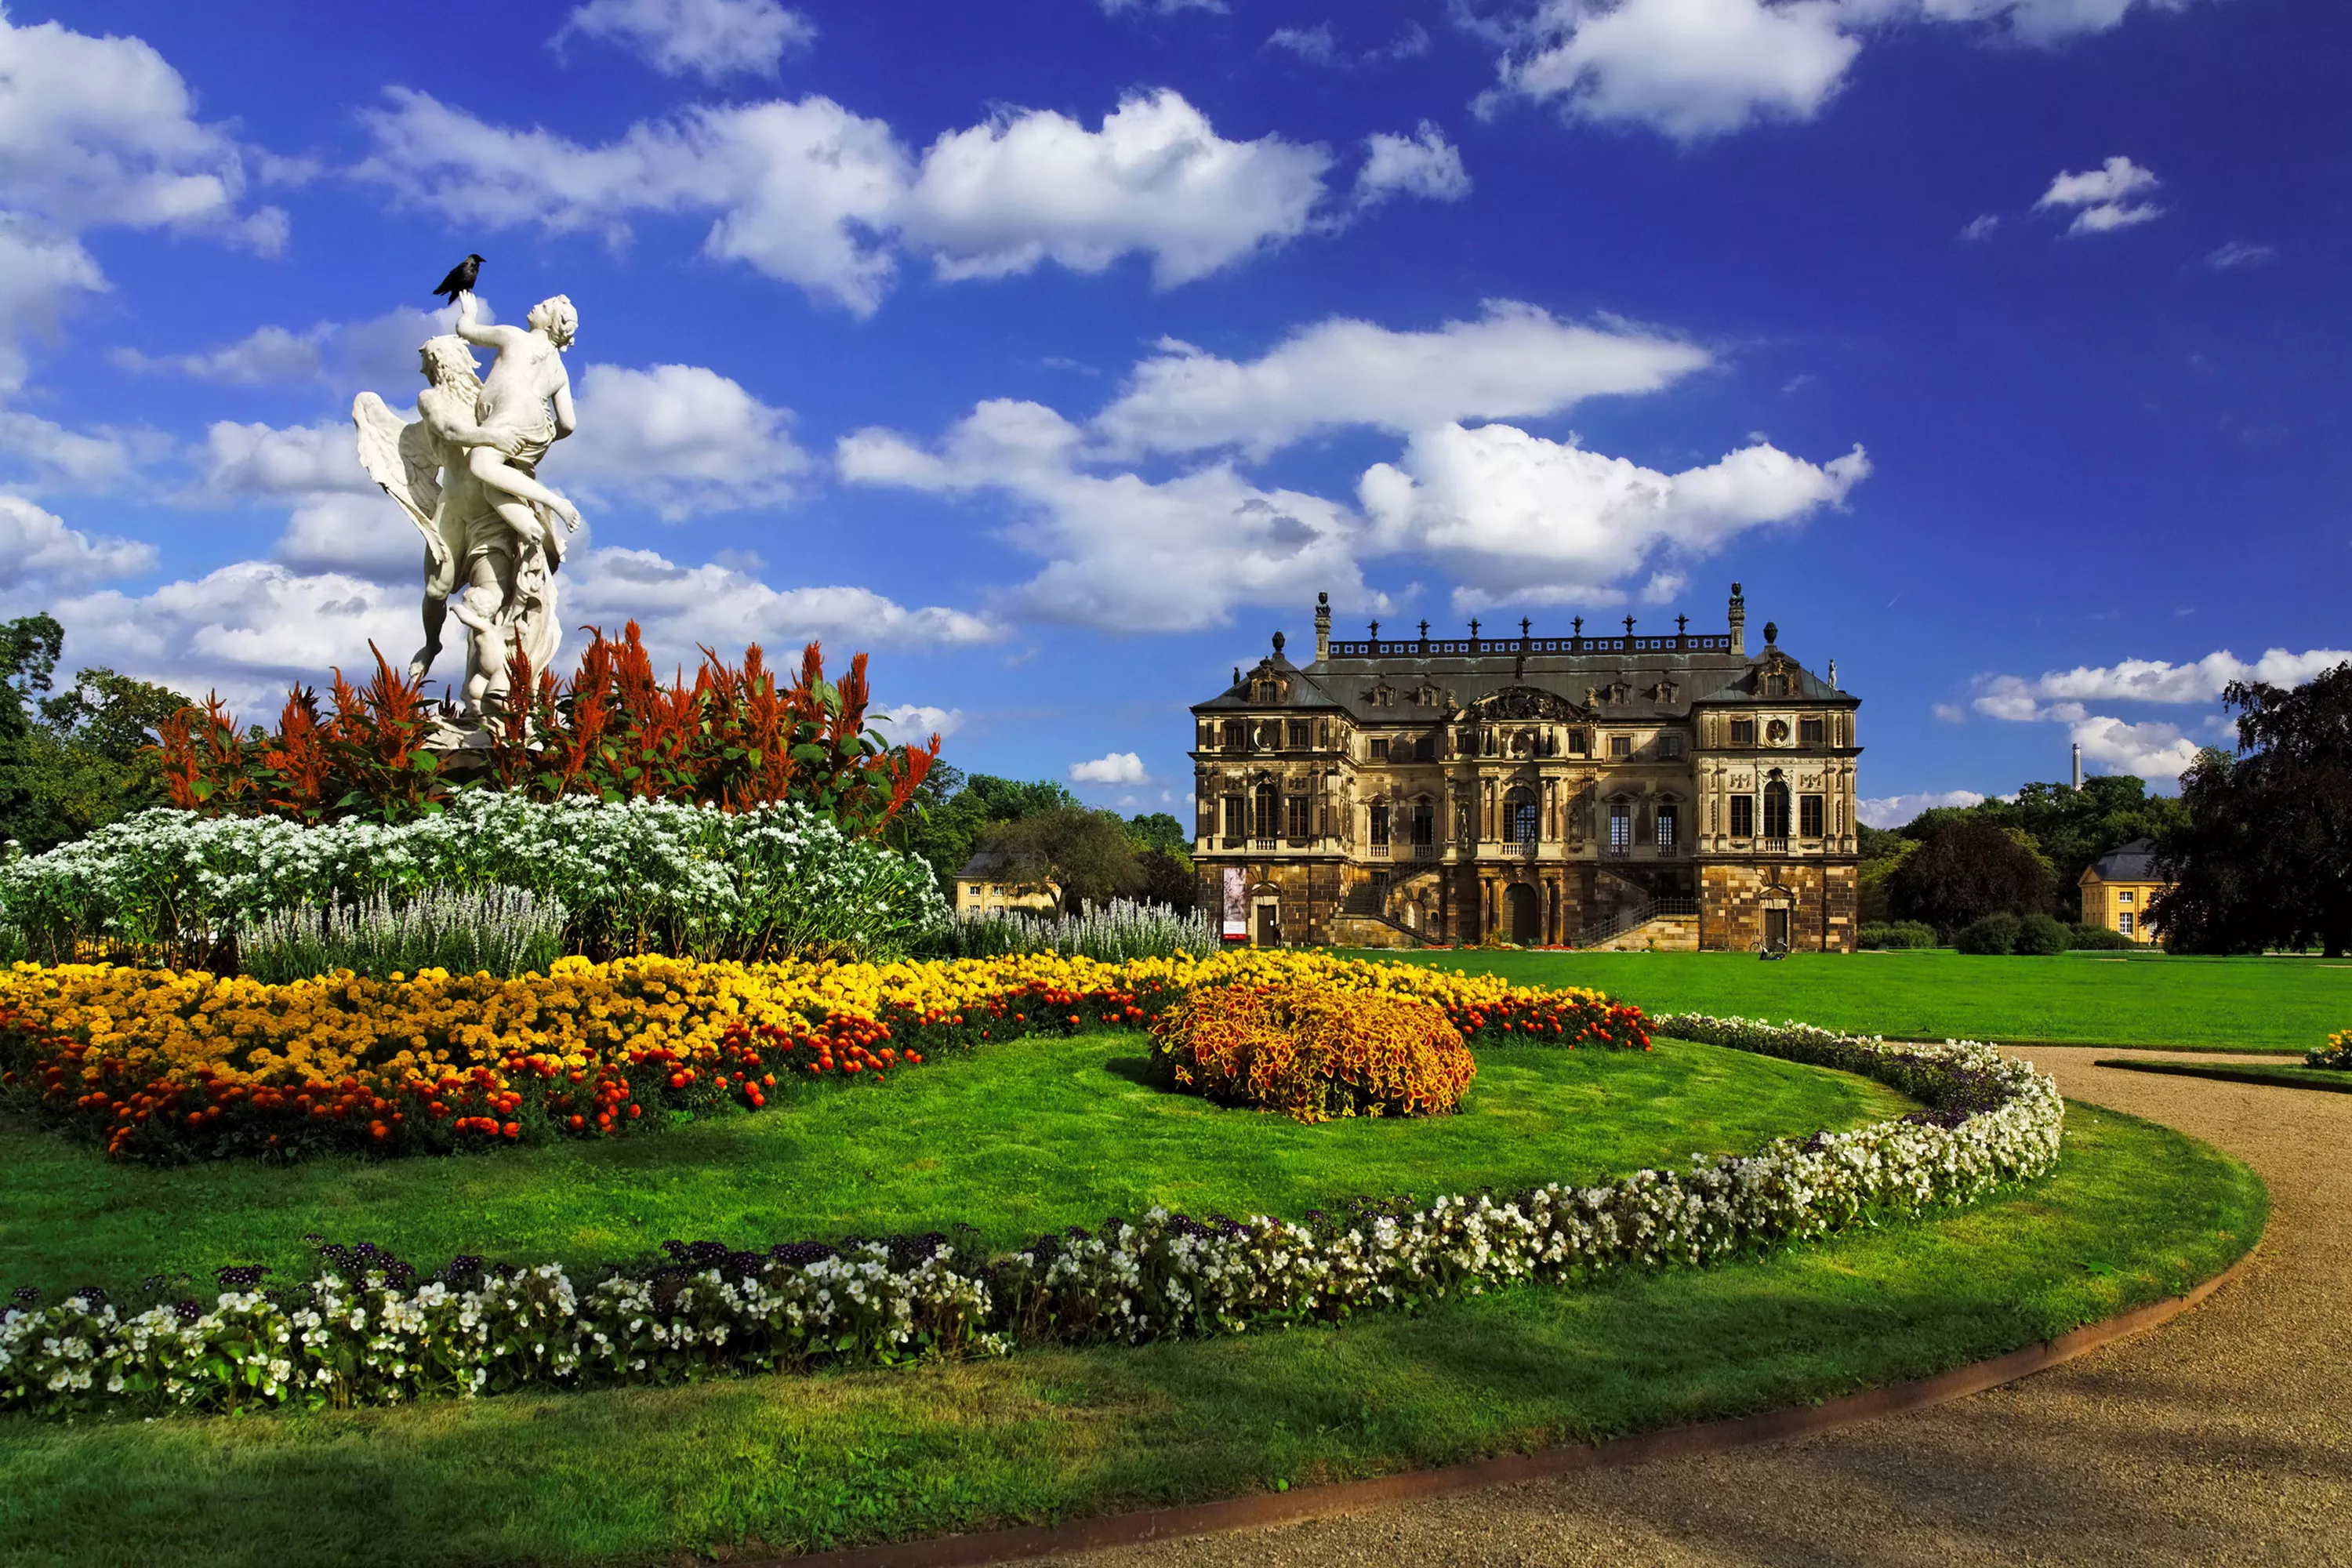 Grosser Garten in Germany, Europe | Parks - Rated 4.1